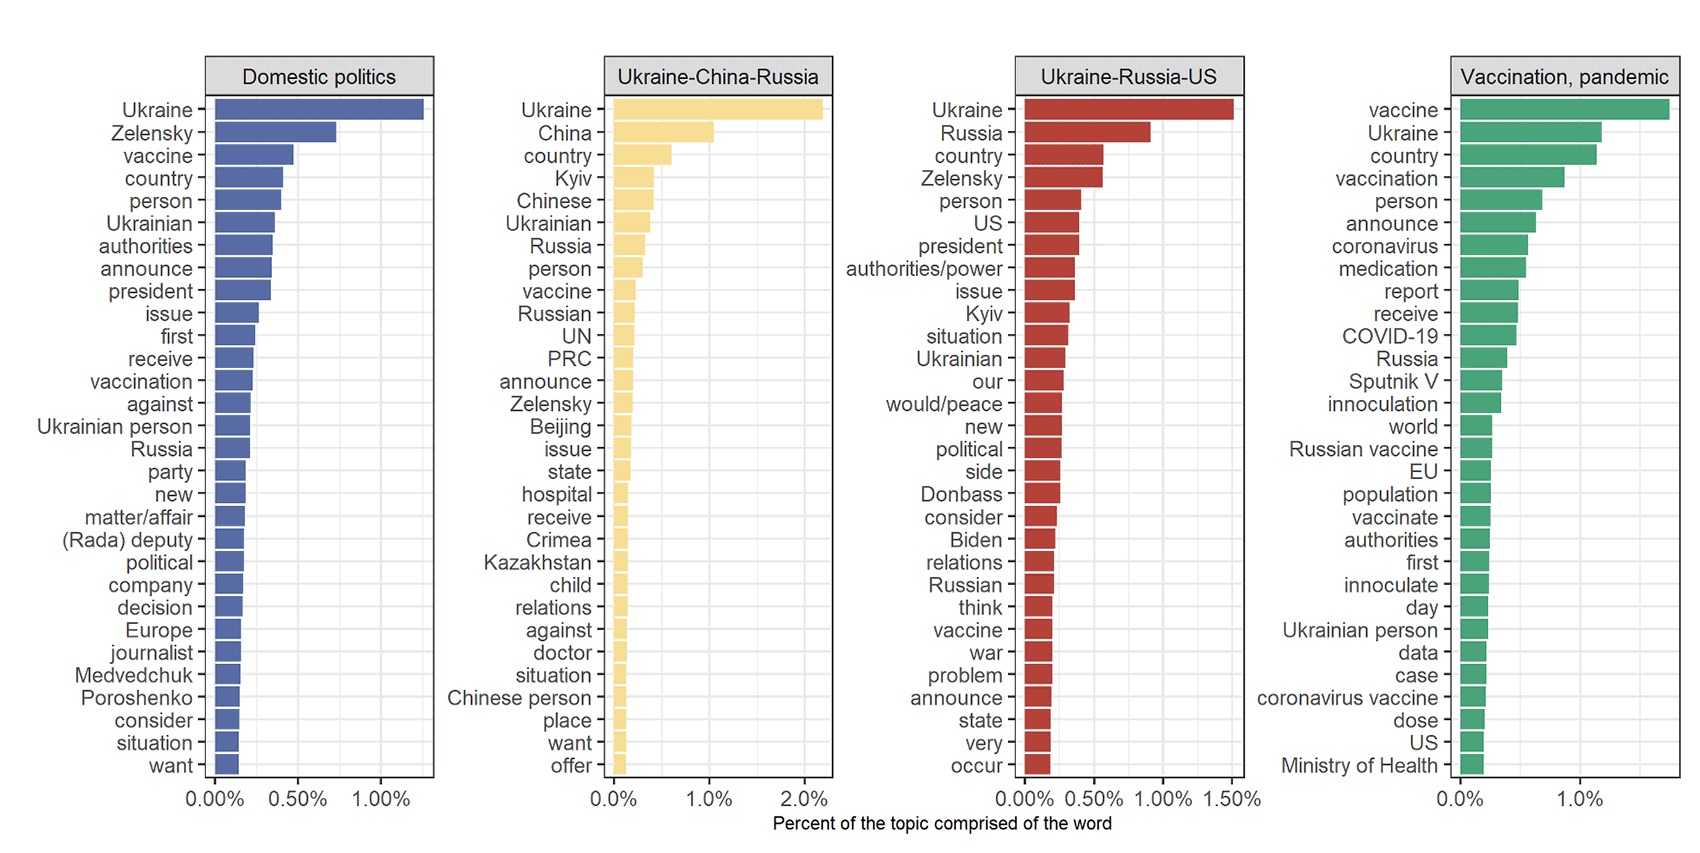 Bar graph showing percentage of keywords pertaining to topics: Domestic politics, Ukraine-China-Russia, Ukraine-Russia-US, Vaccination, pandemic